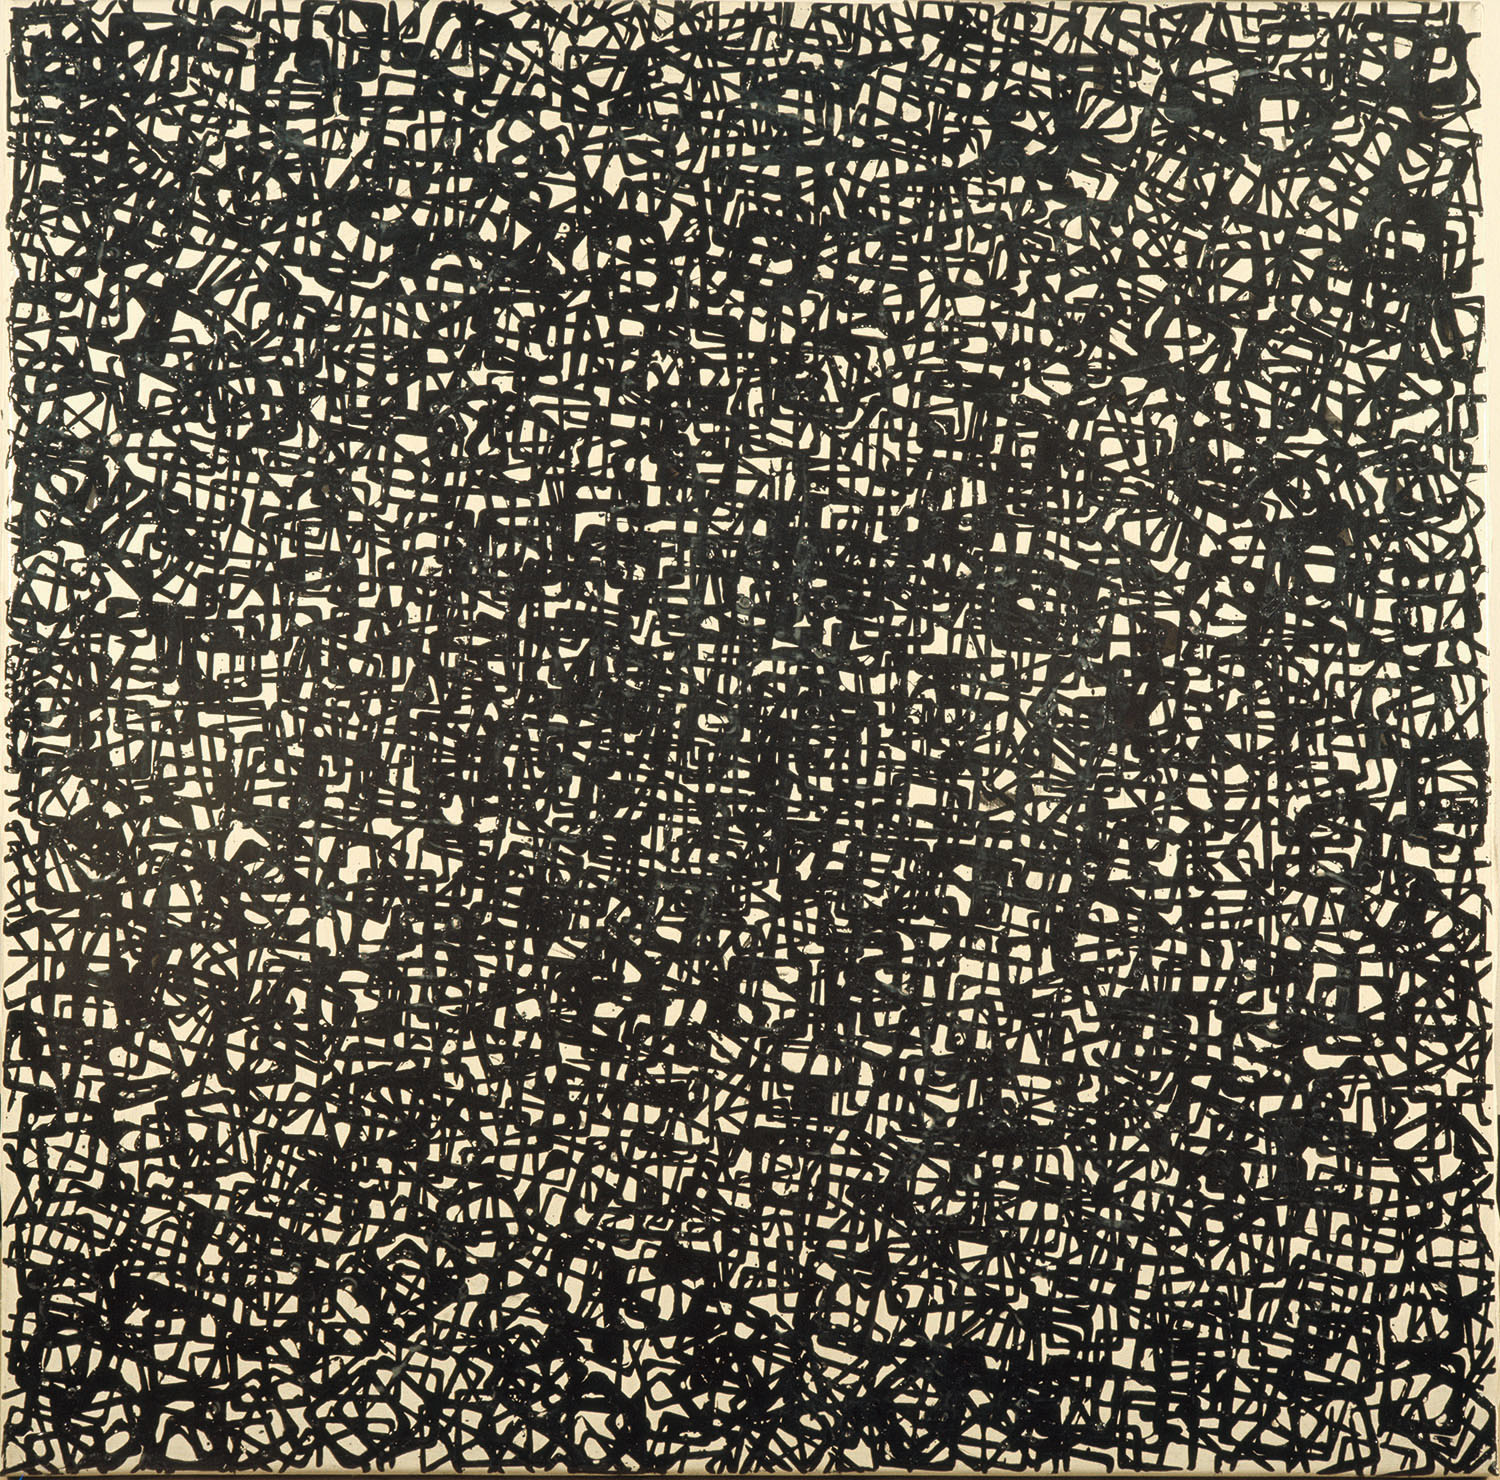 Kinetic composition, 1973, oil on canvas, cm 110 x 110